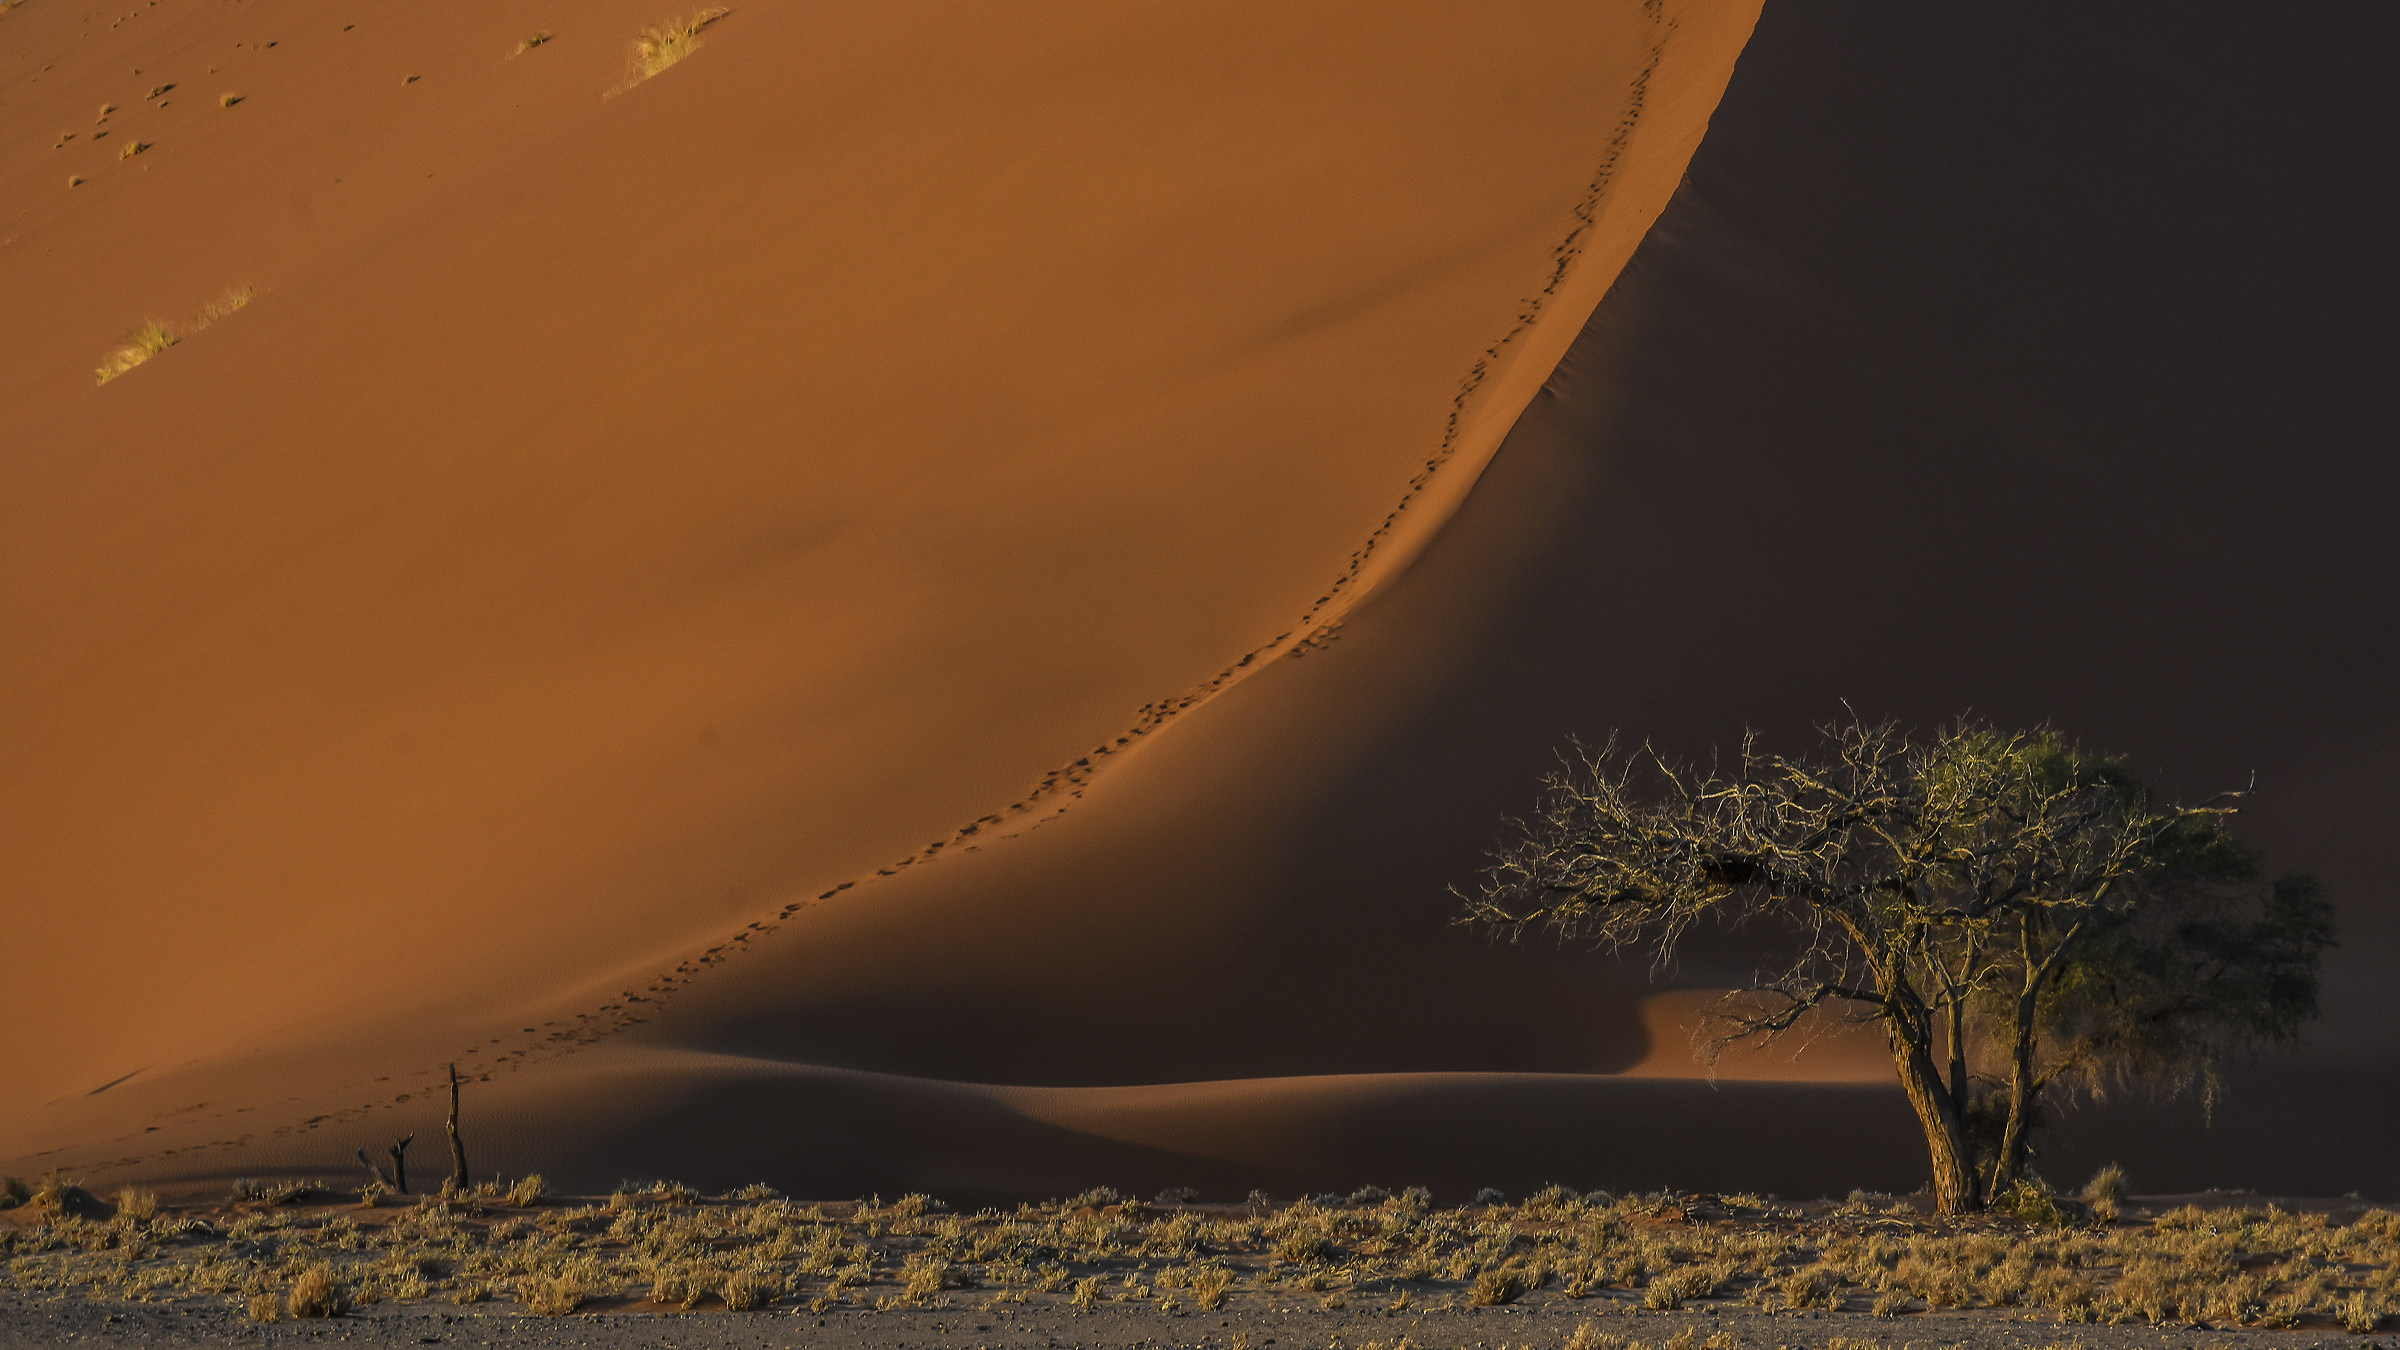 Namibian Dune. Sossousvlei, Namibia...